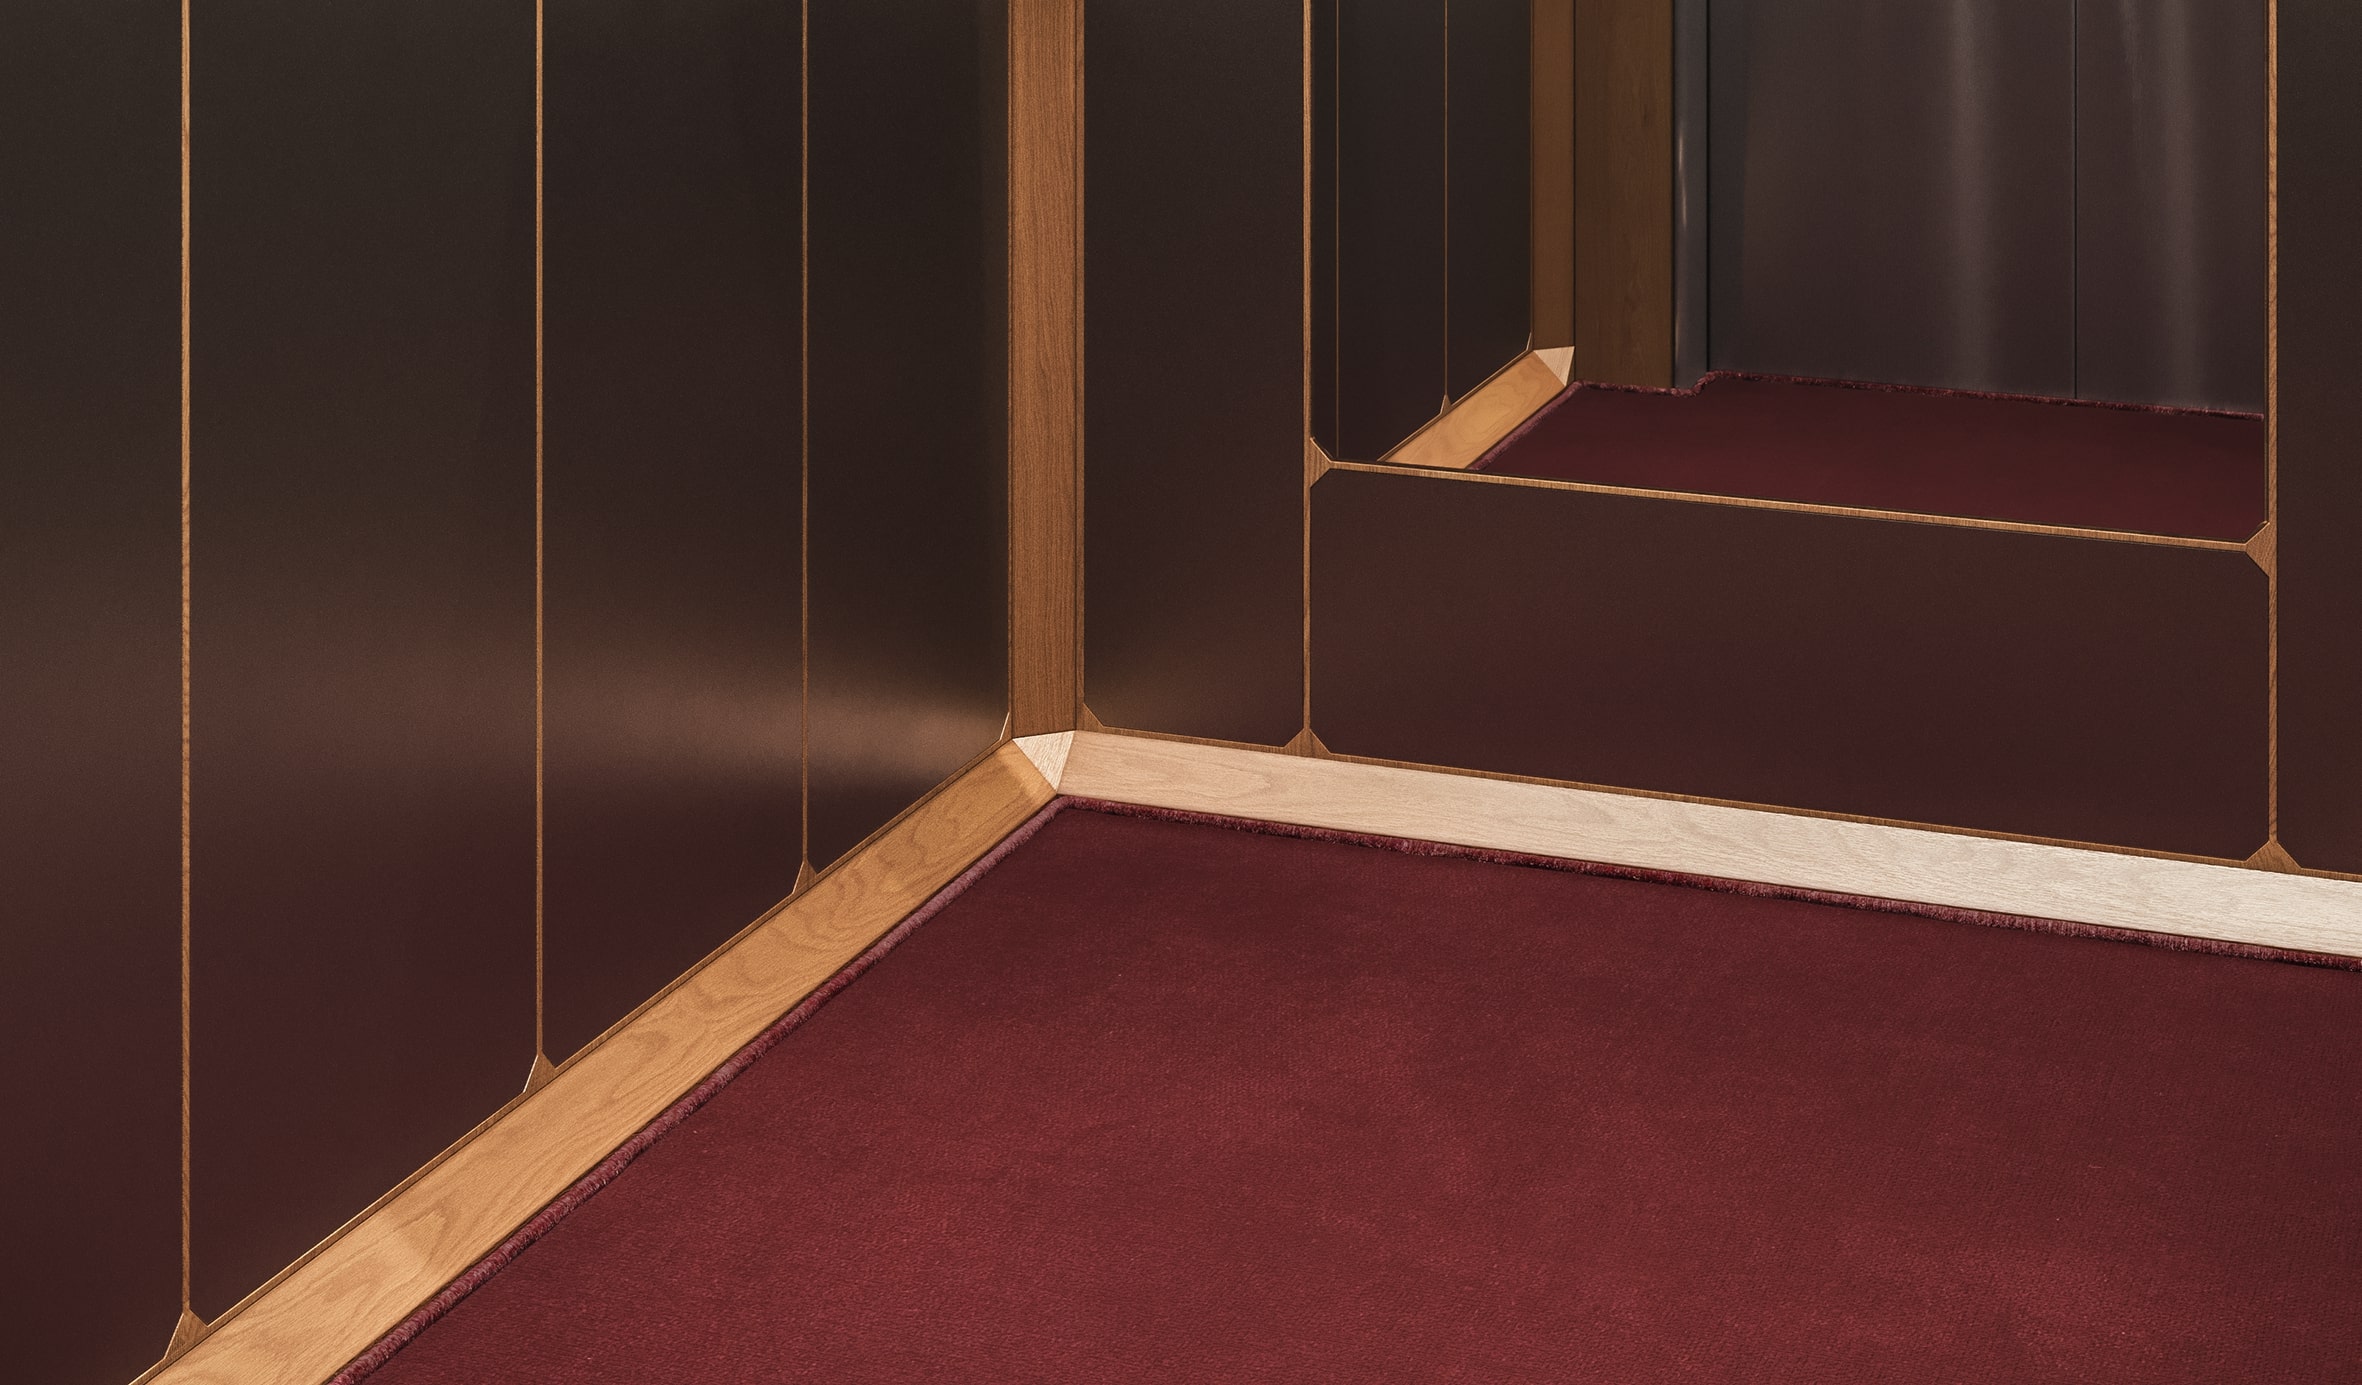 Mitsulift unveils new elevator cabin design series